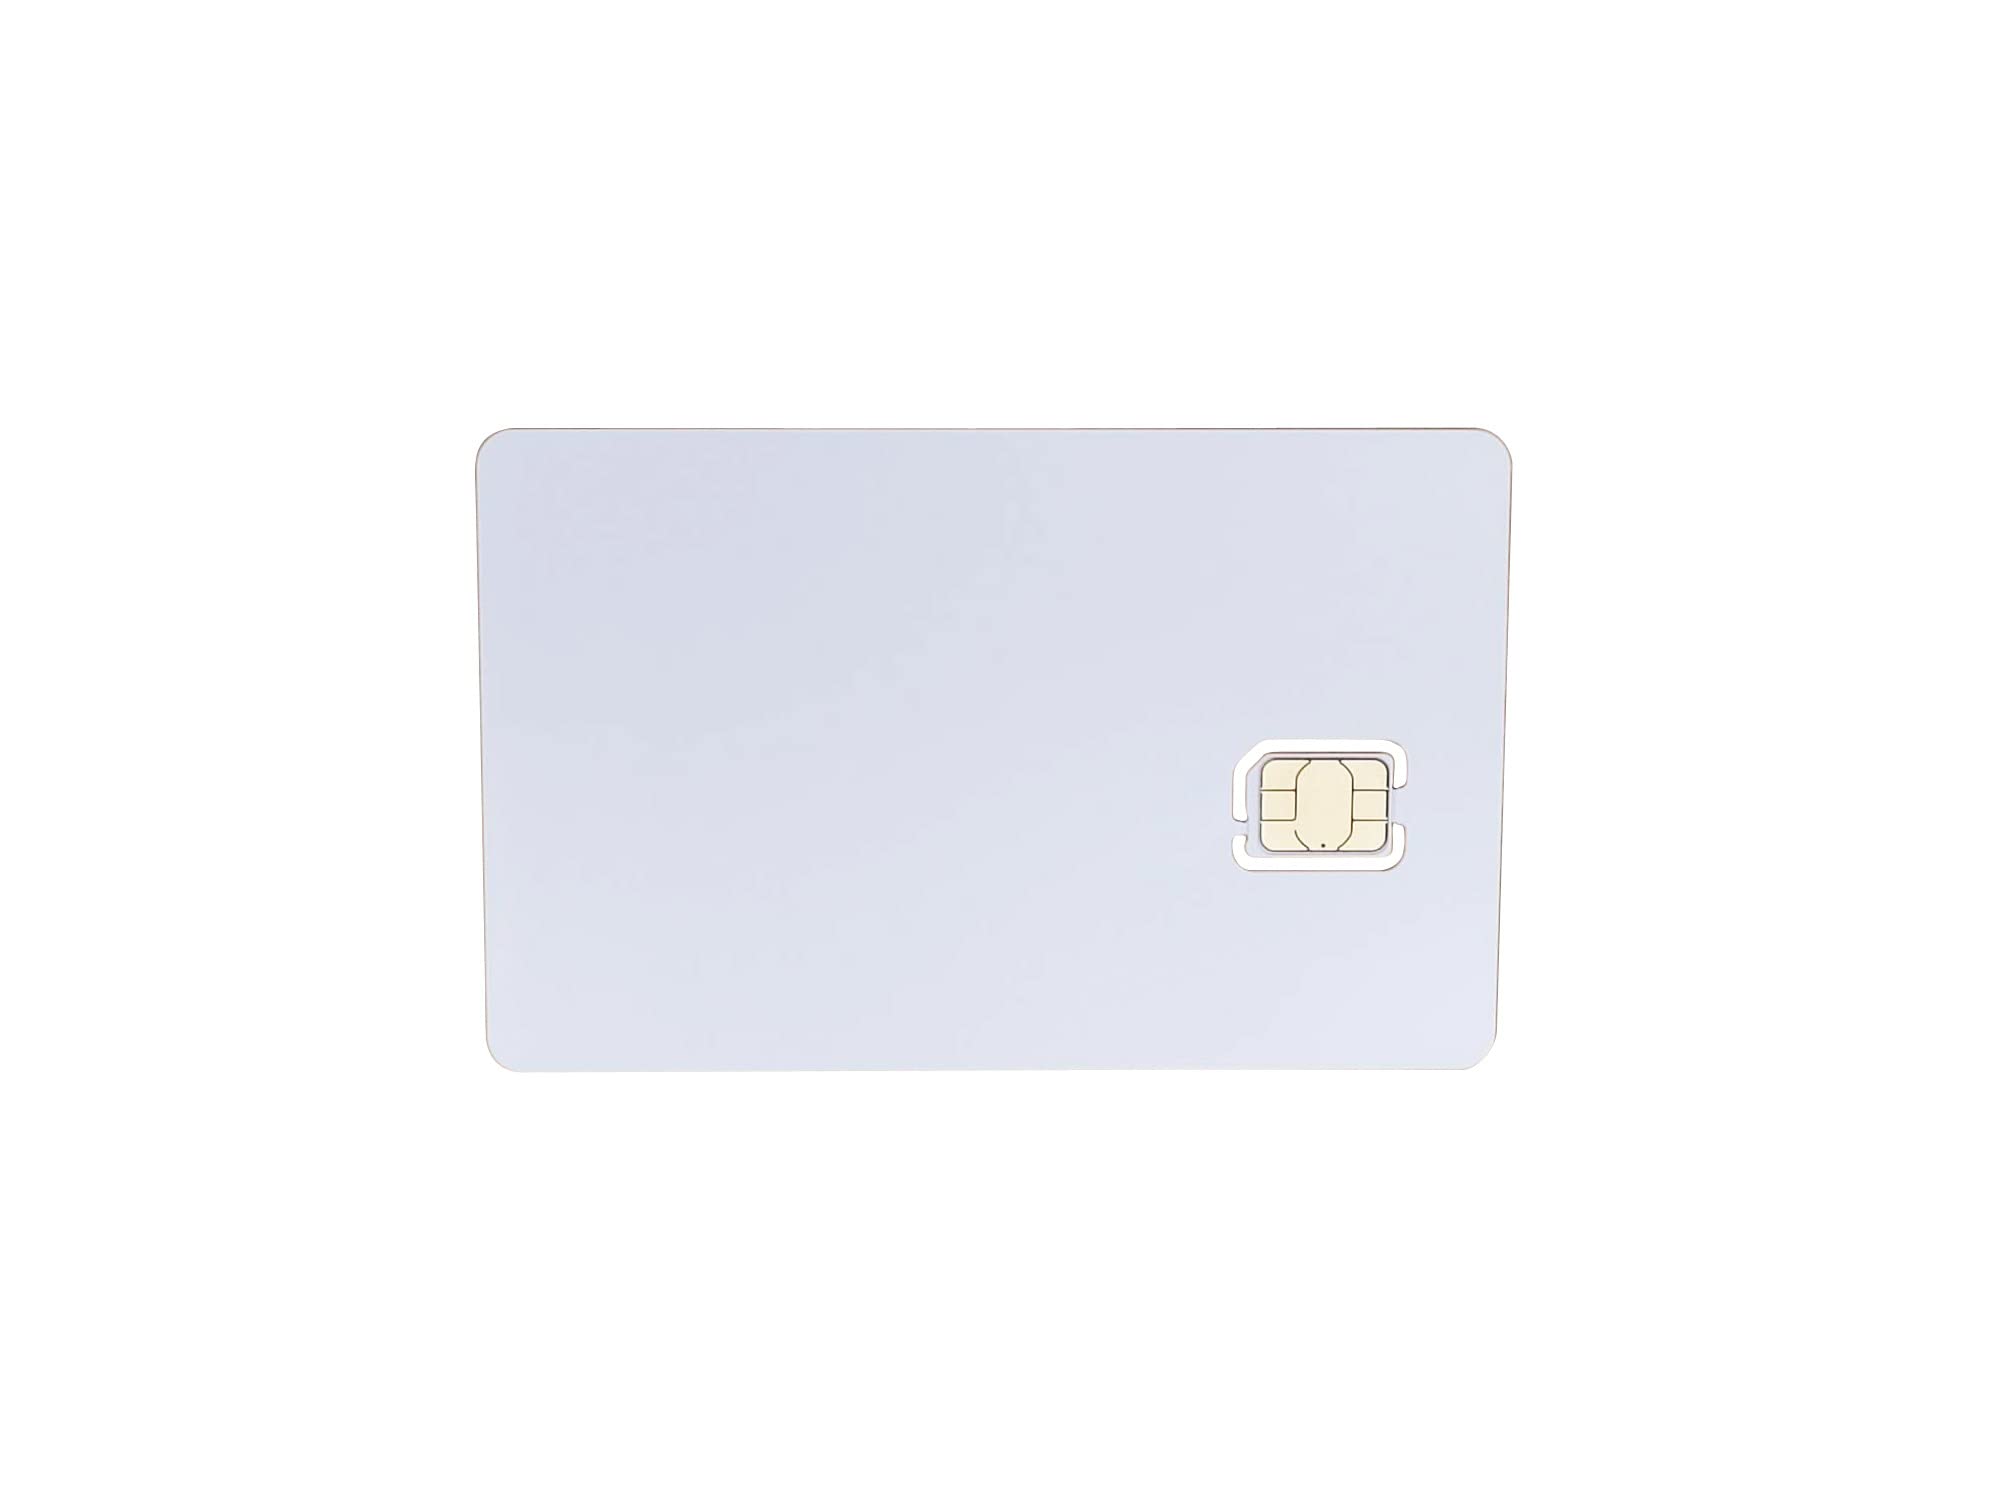 Sprint ICC ID Nano SIM Card for iPhone 5 SIMGLW406R